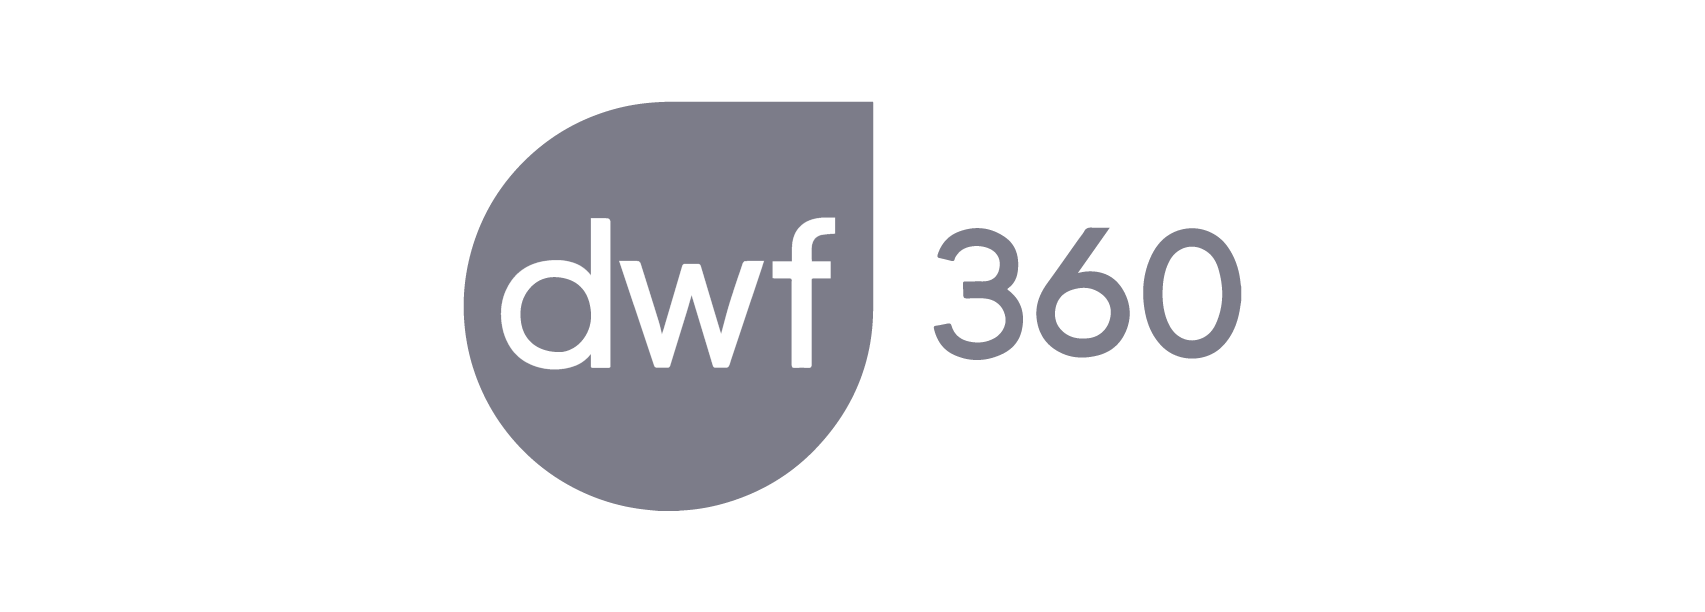 dwf-360-logo-7